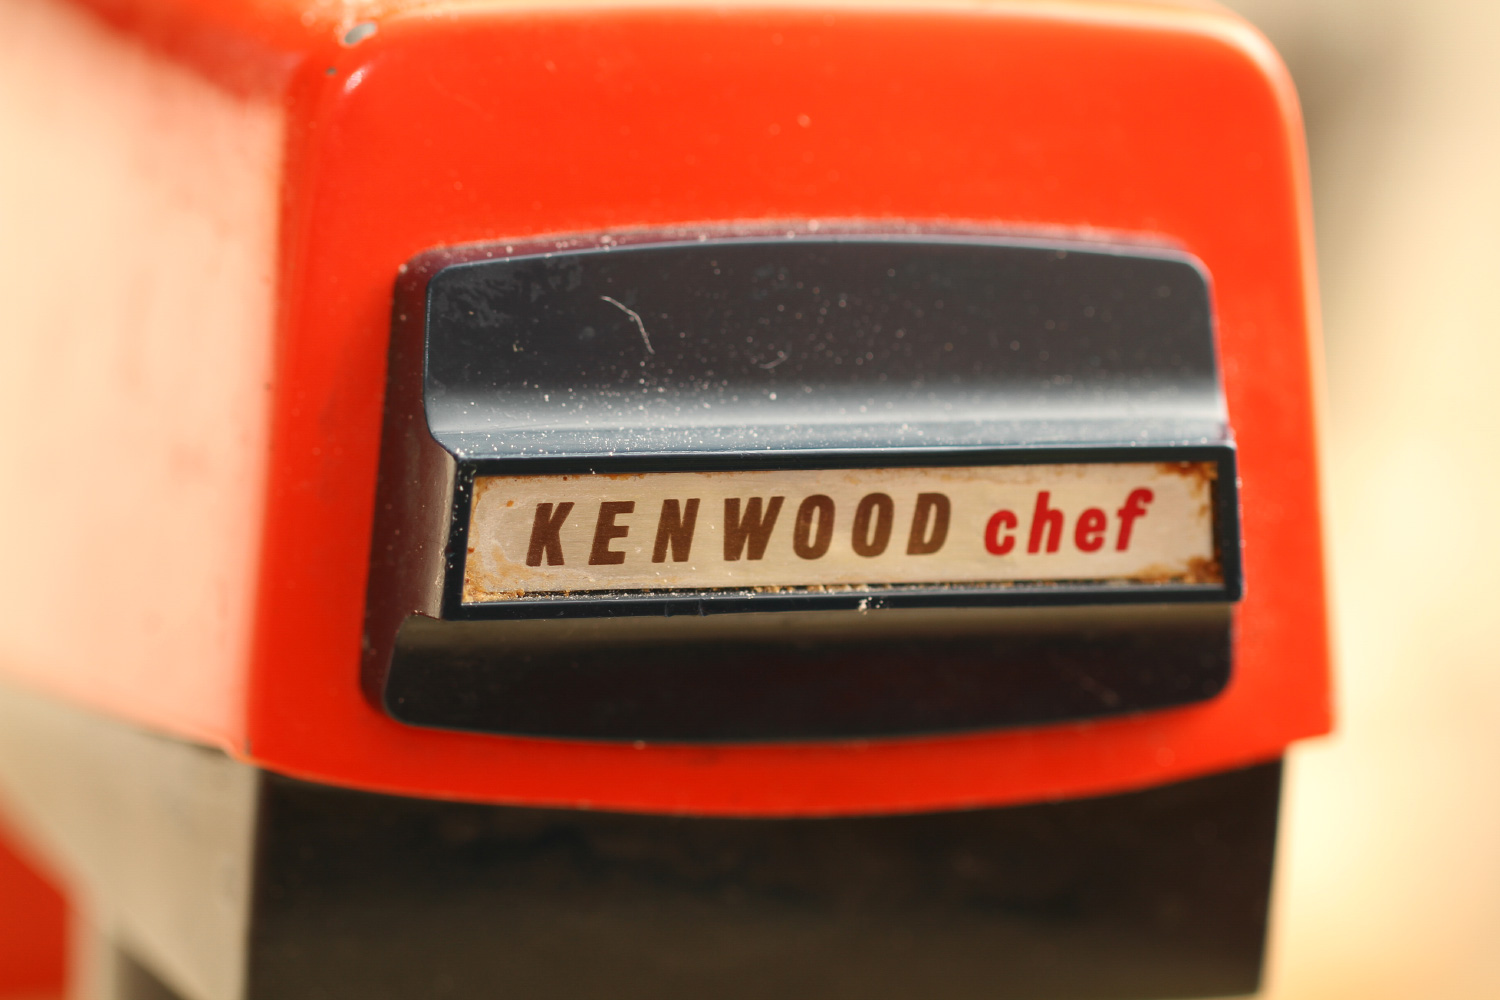 Røremaskin Kenwood chef